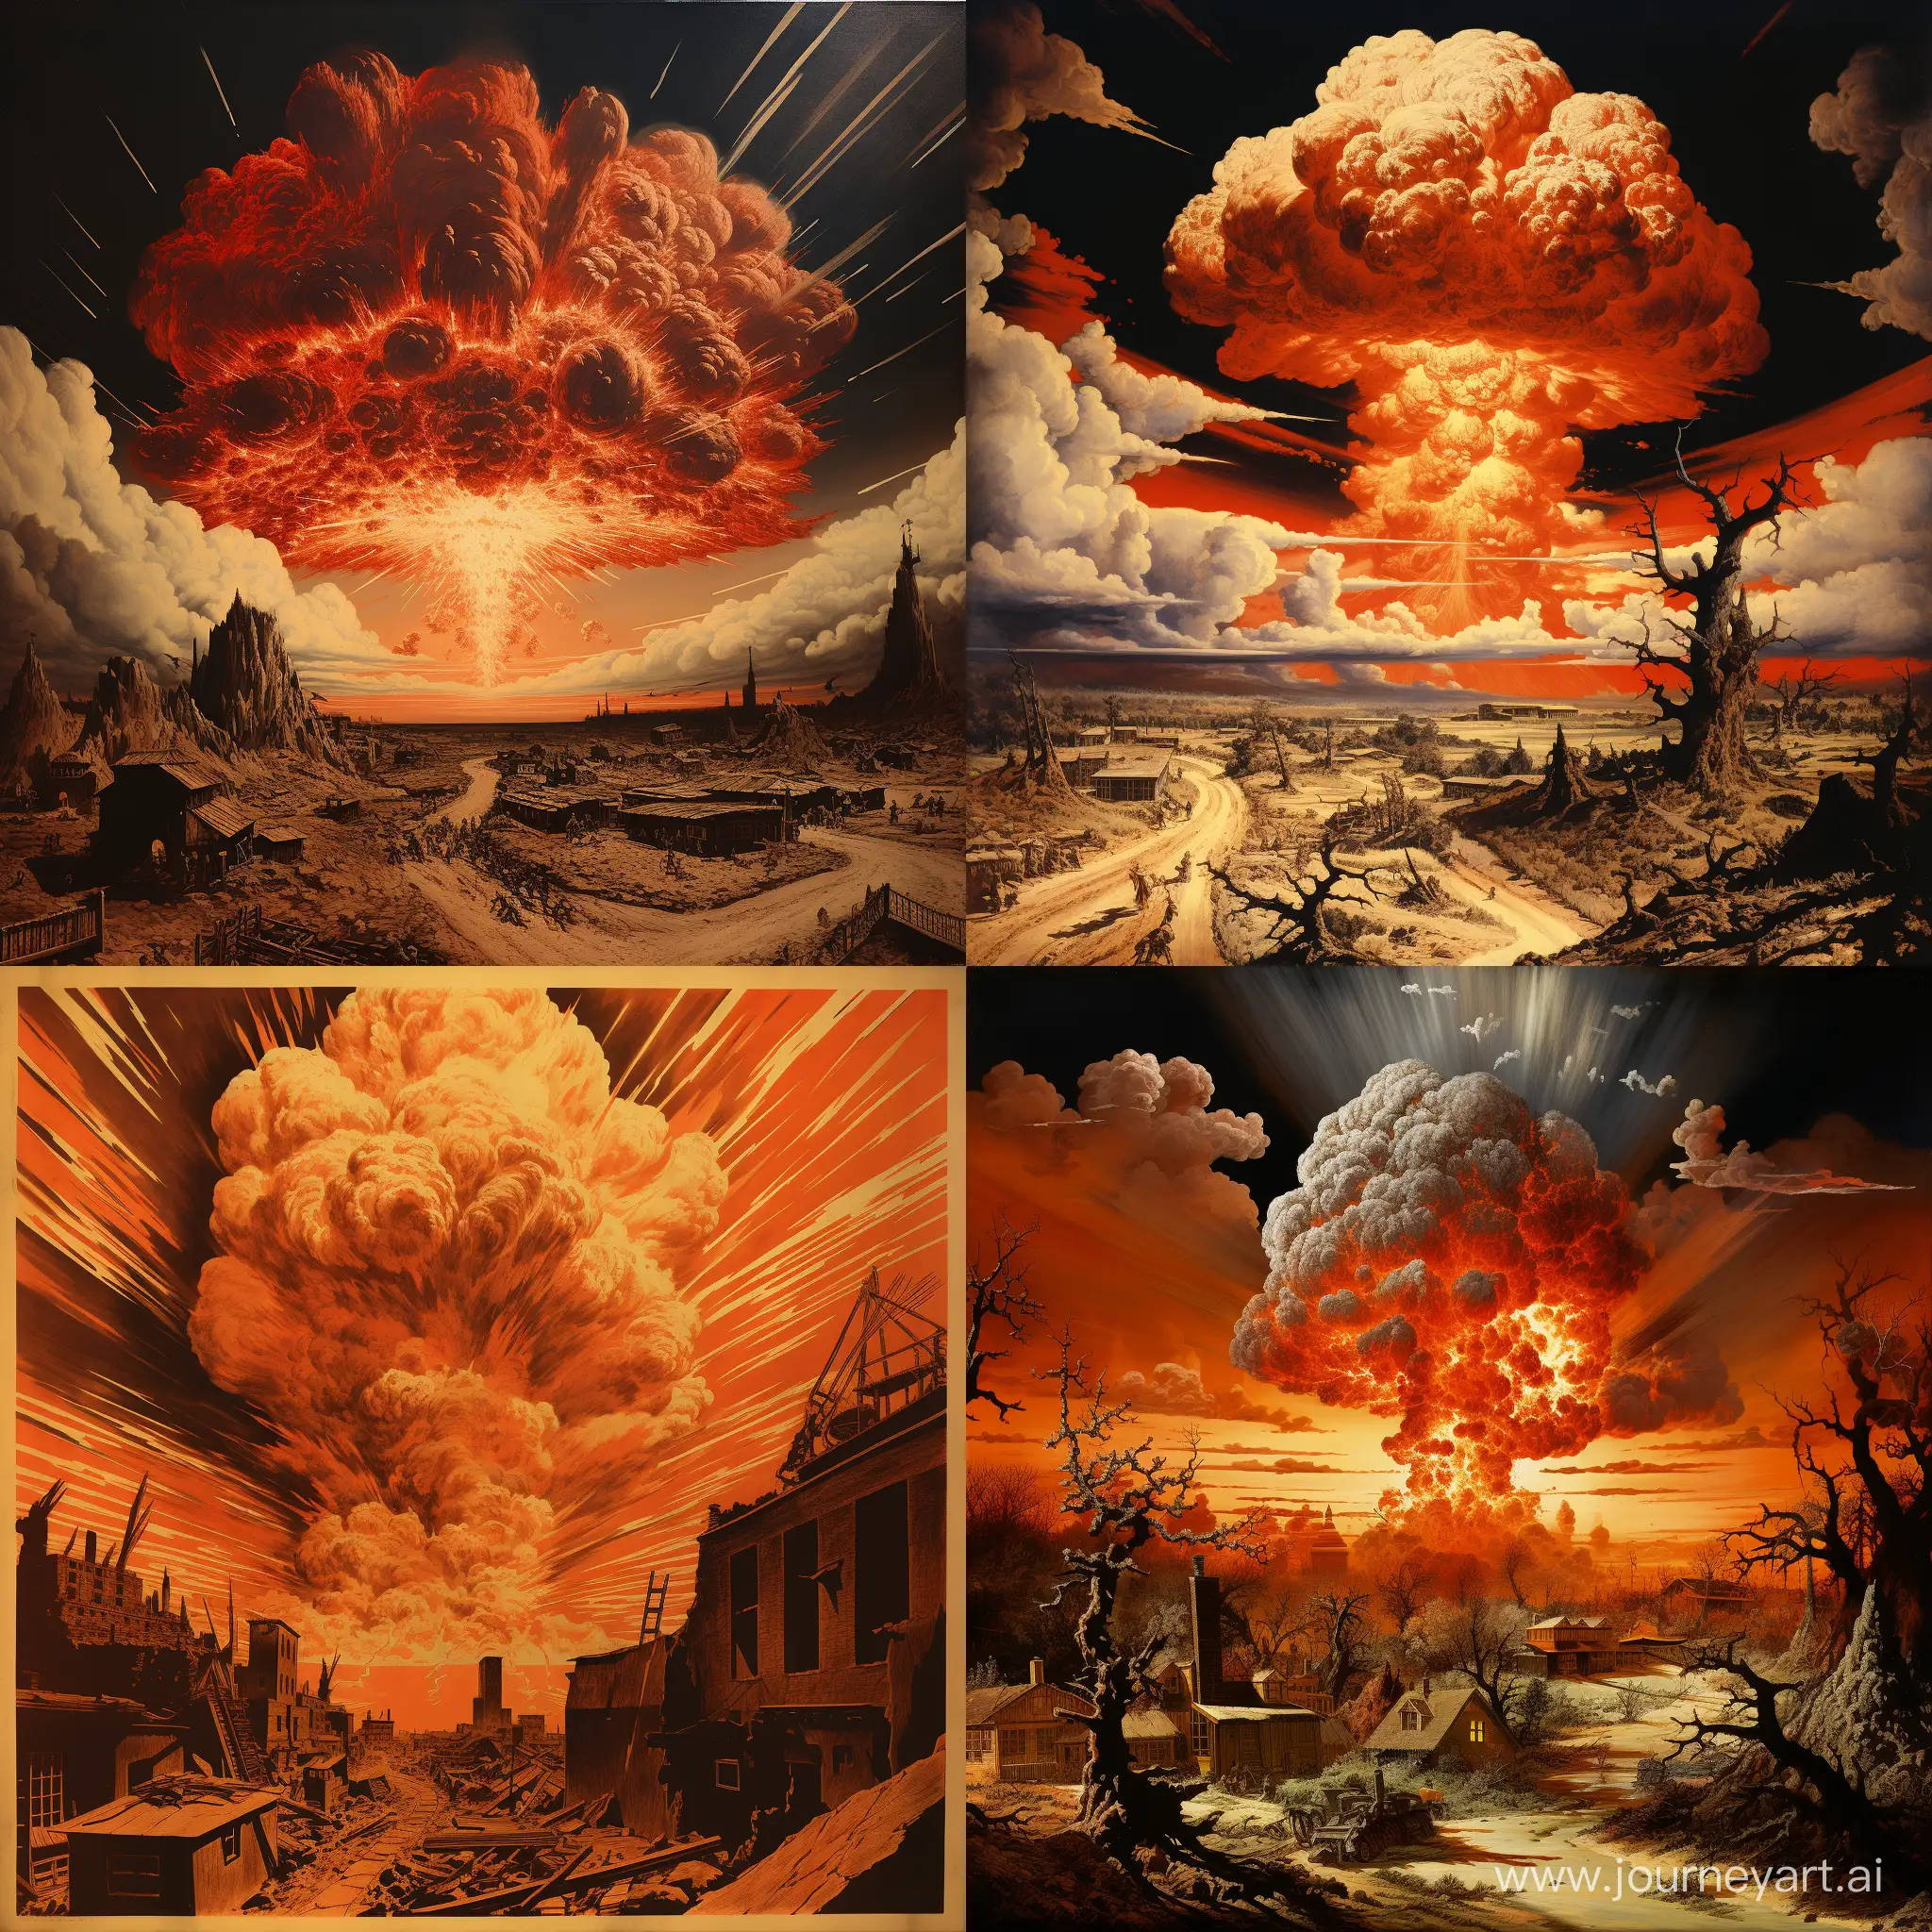 Massive nuclear explosion, obliterating colony, 1940s early American propaganda art style